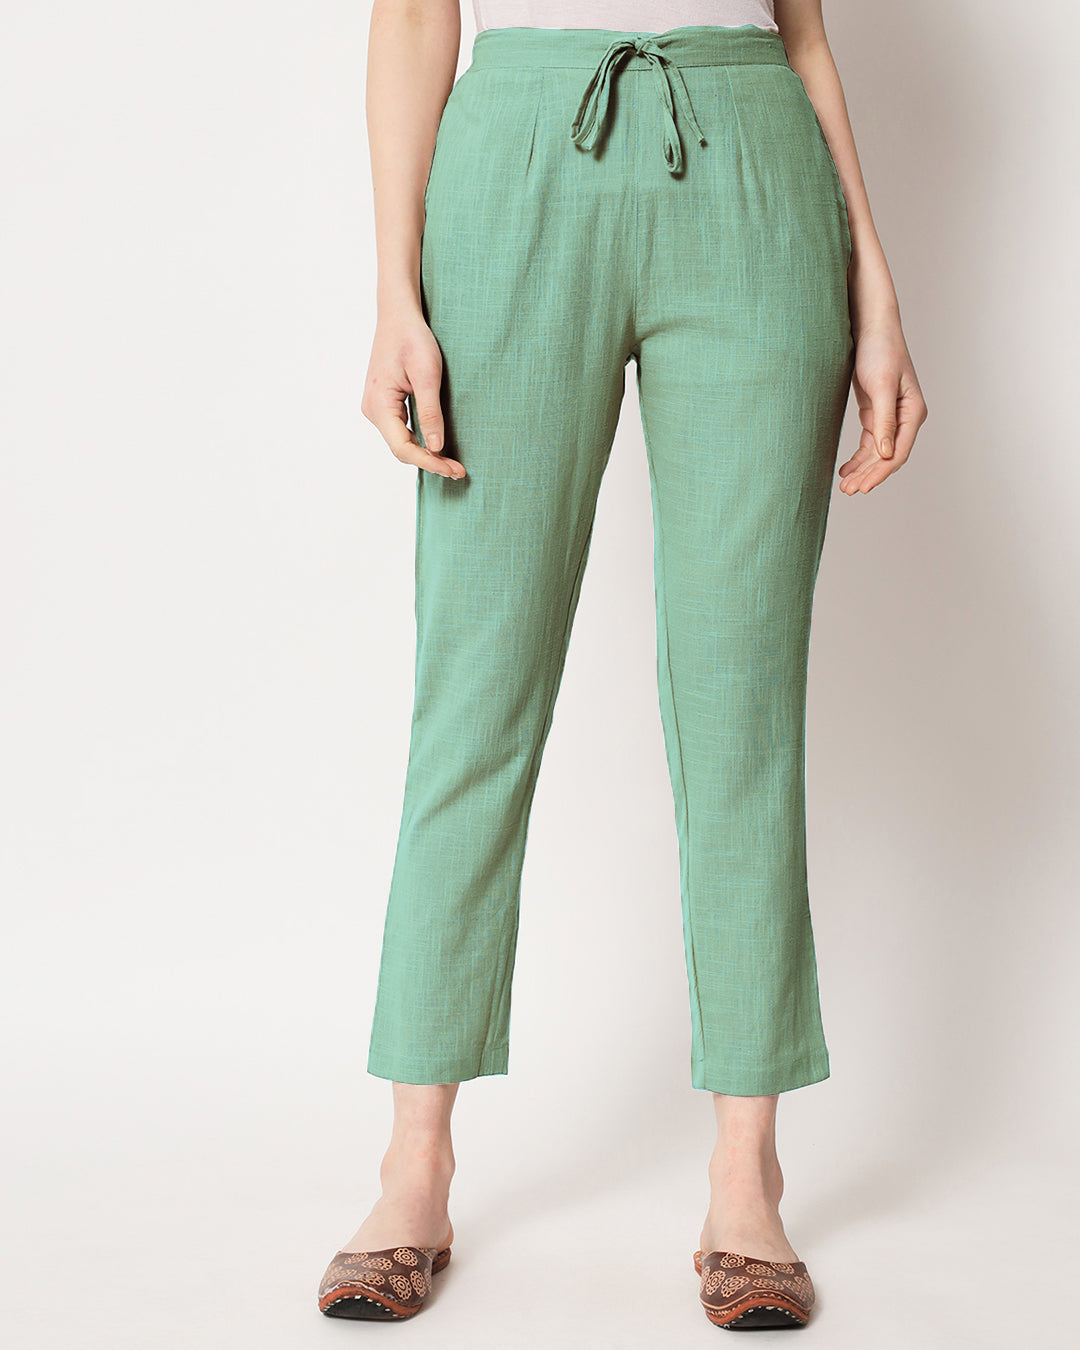 Combo: Lilac & Easy Green Cigarette Pants- Set of 2